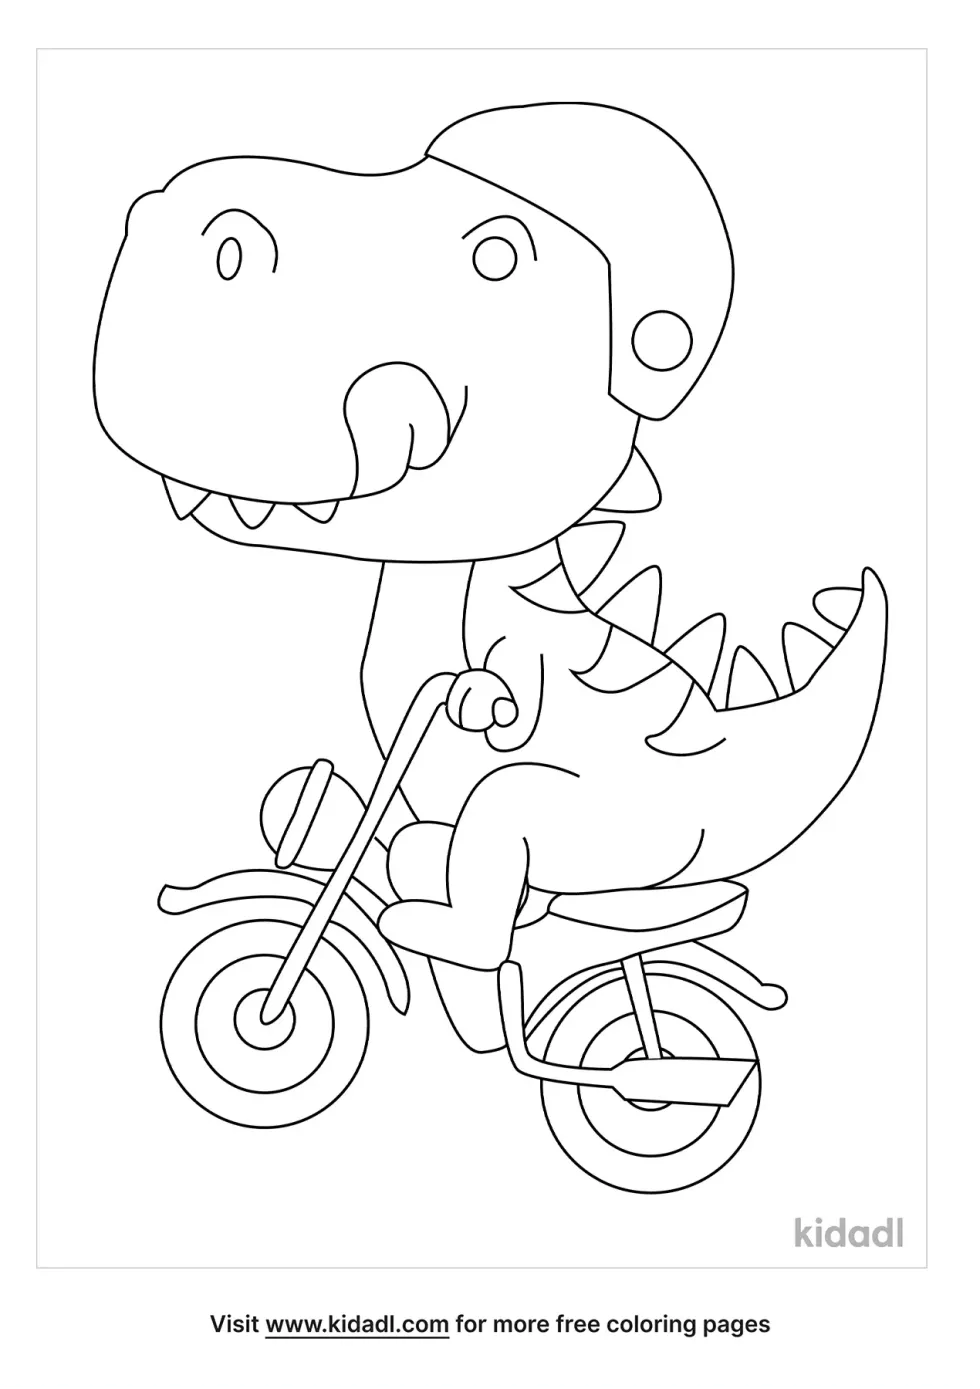 Dinosaur On A Motorcycle